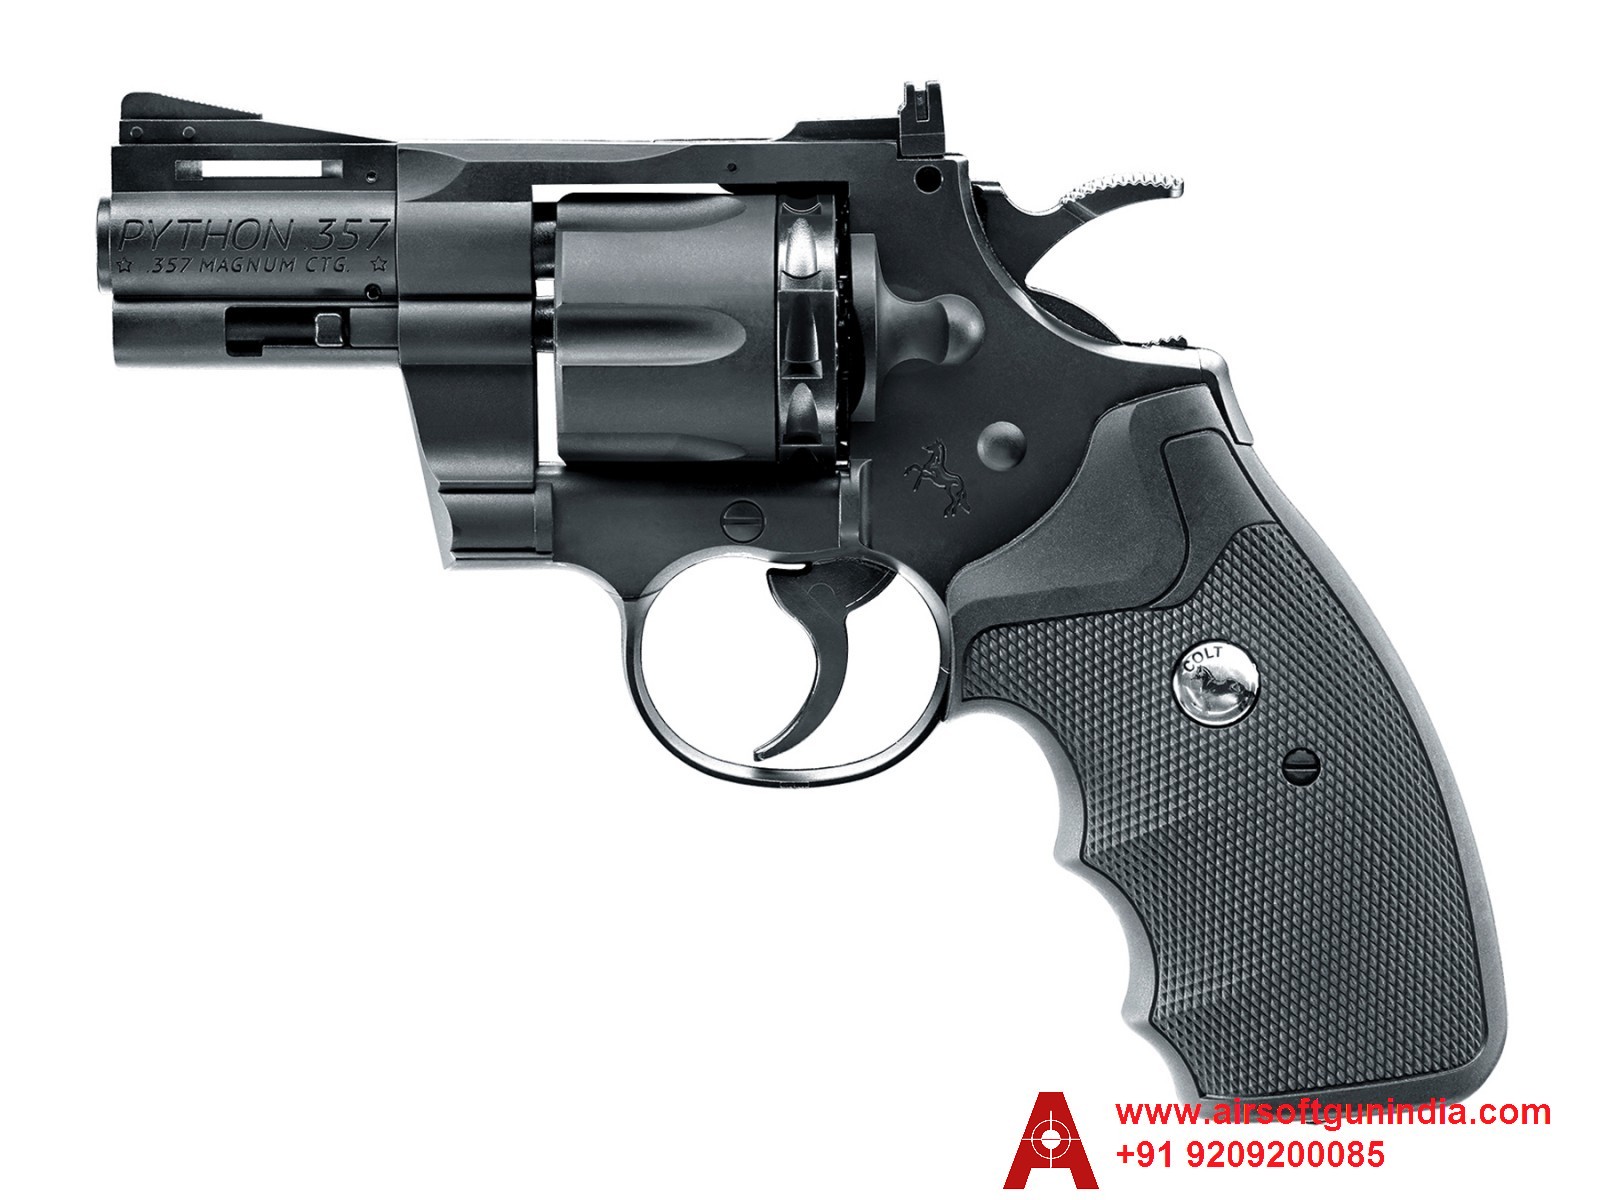 UMAREX Colt Python 357 Pellet And Bb Revolver By Airsoft Gun India